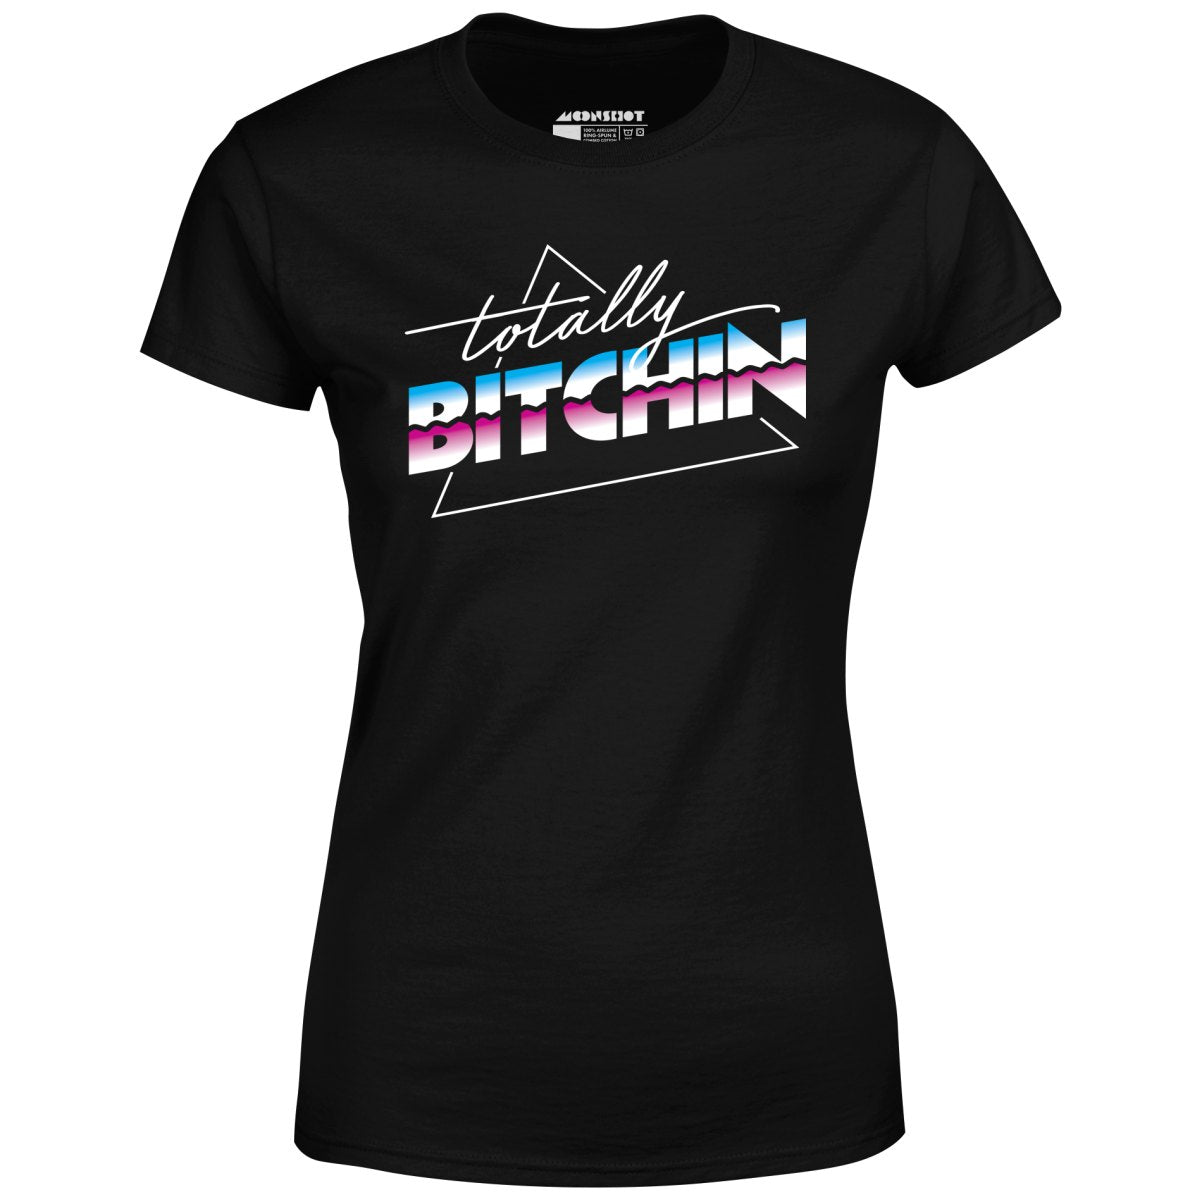 Totally Bitchin - Women's T-Shirt